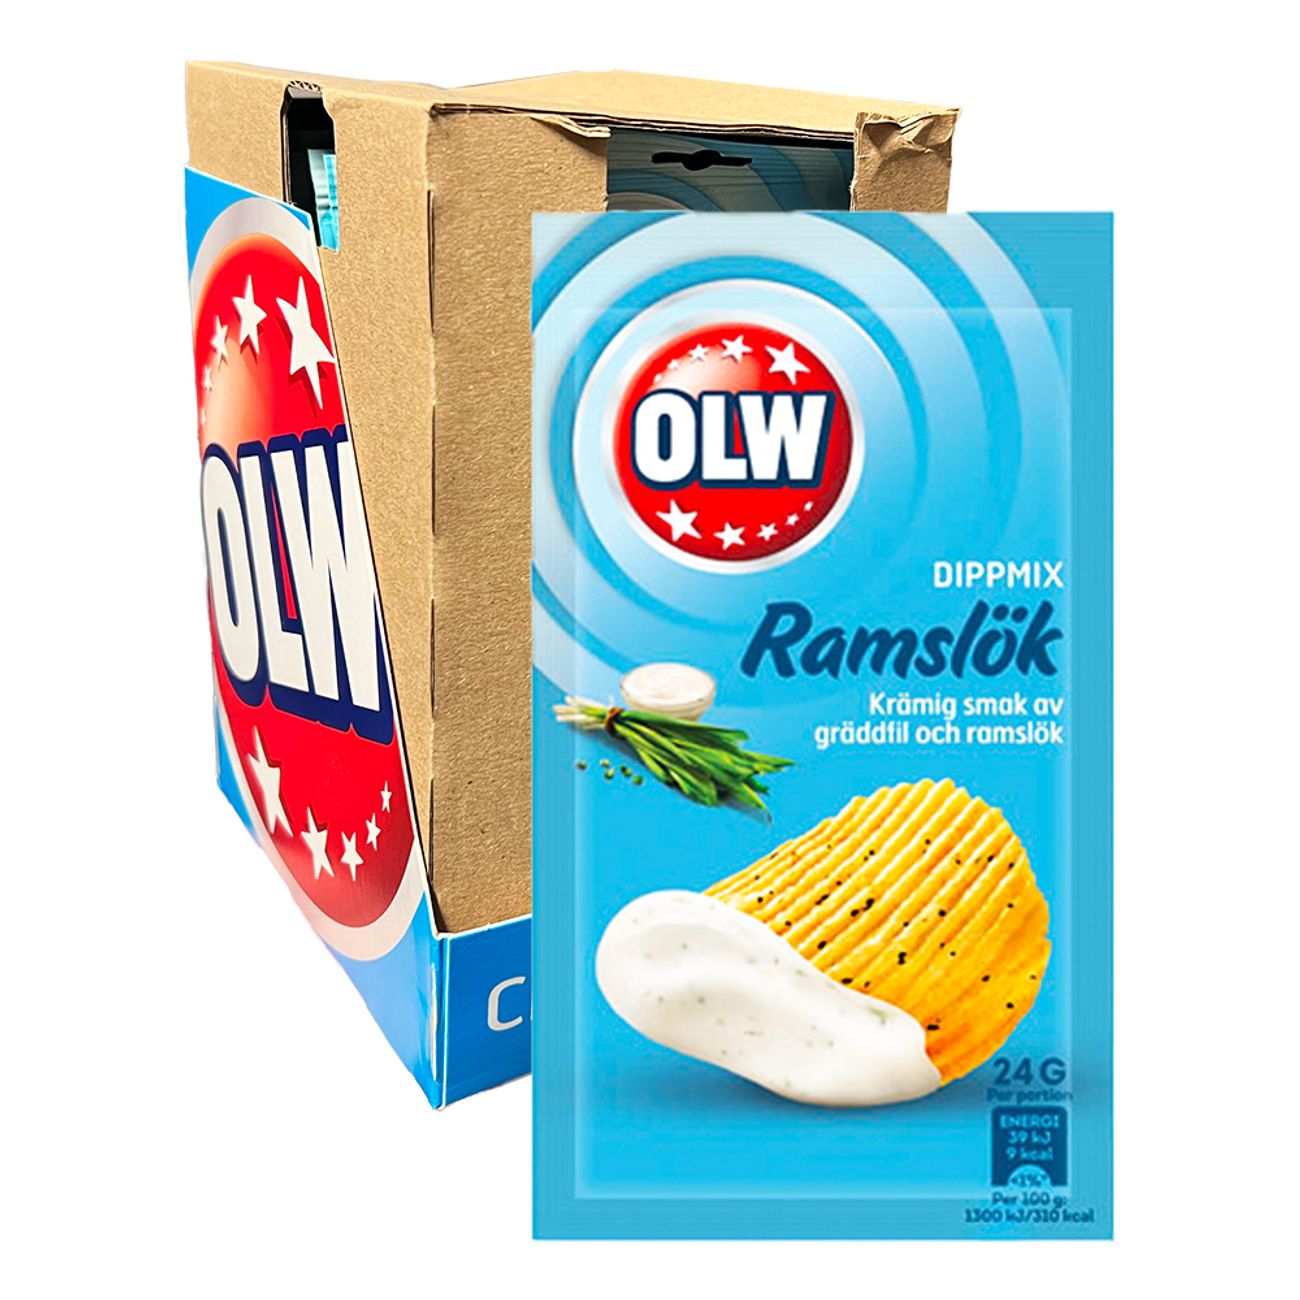 olw-dippmix-ramslok-storpack-50040-2